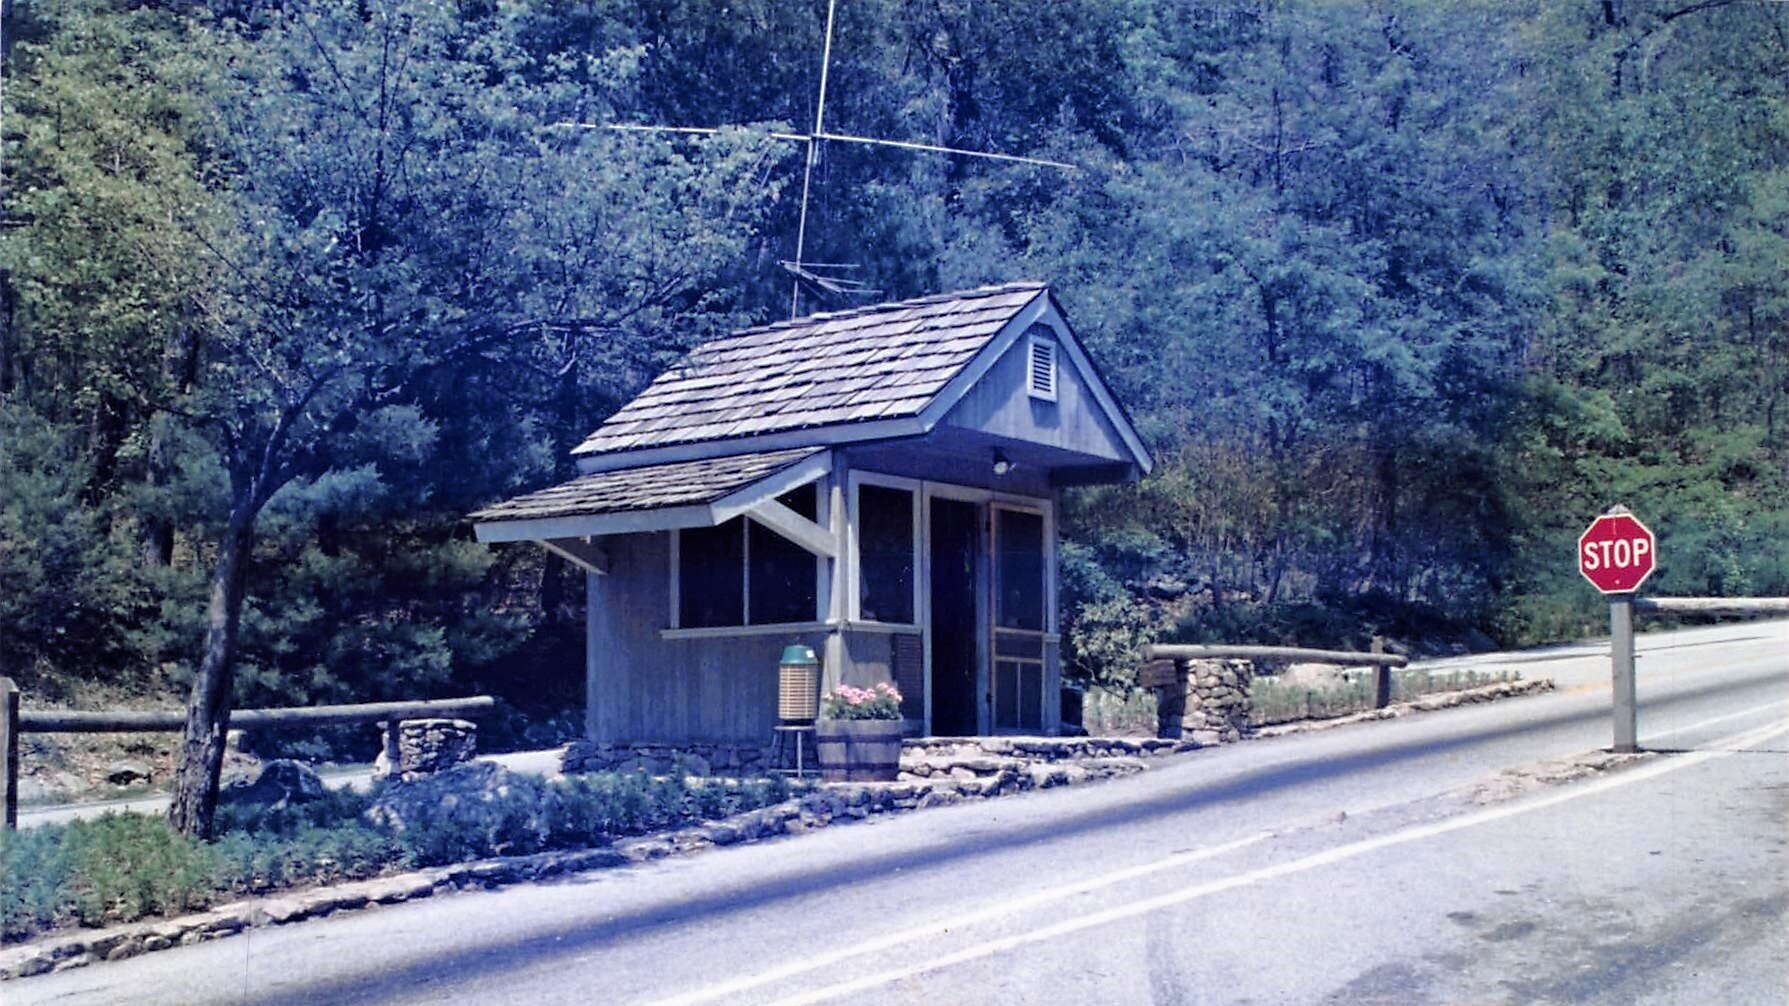 The 1970s Gatehouse